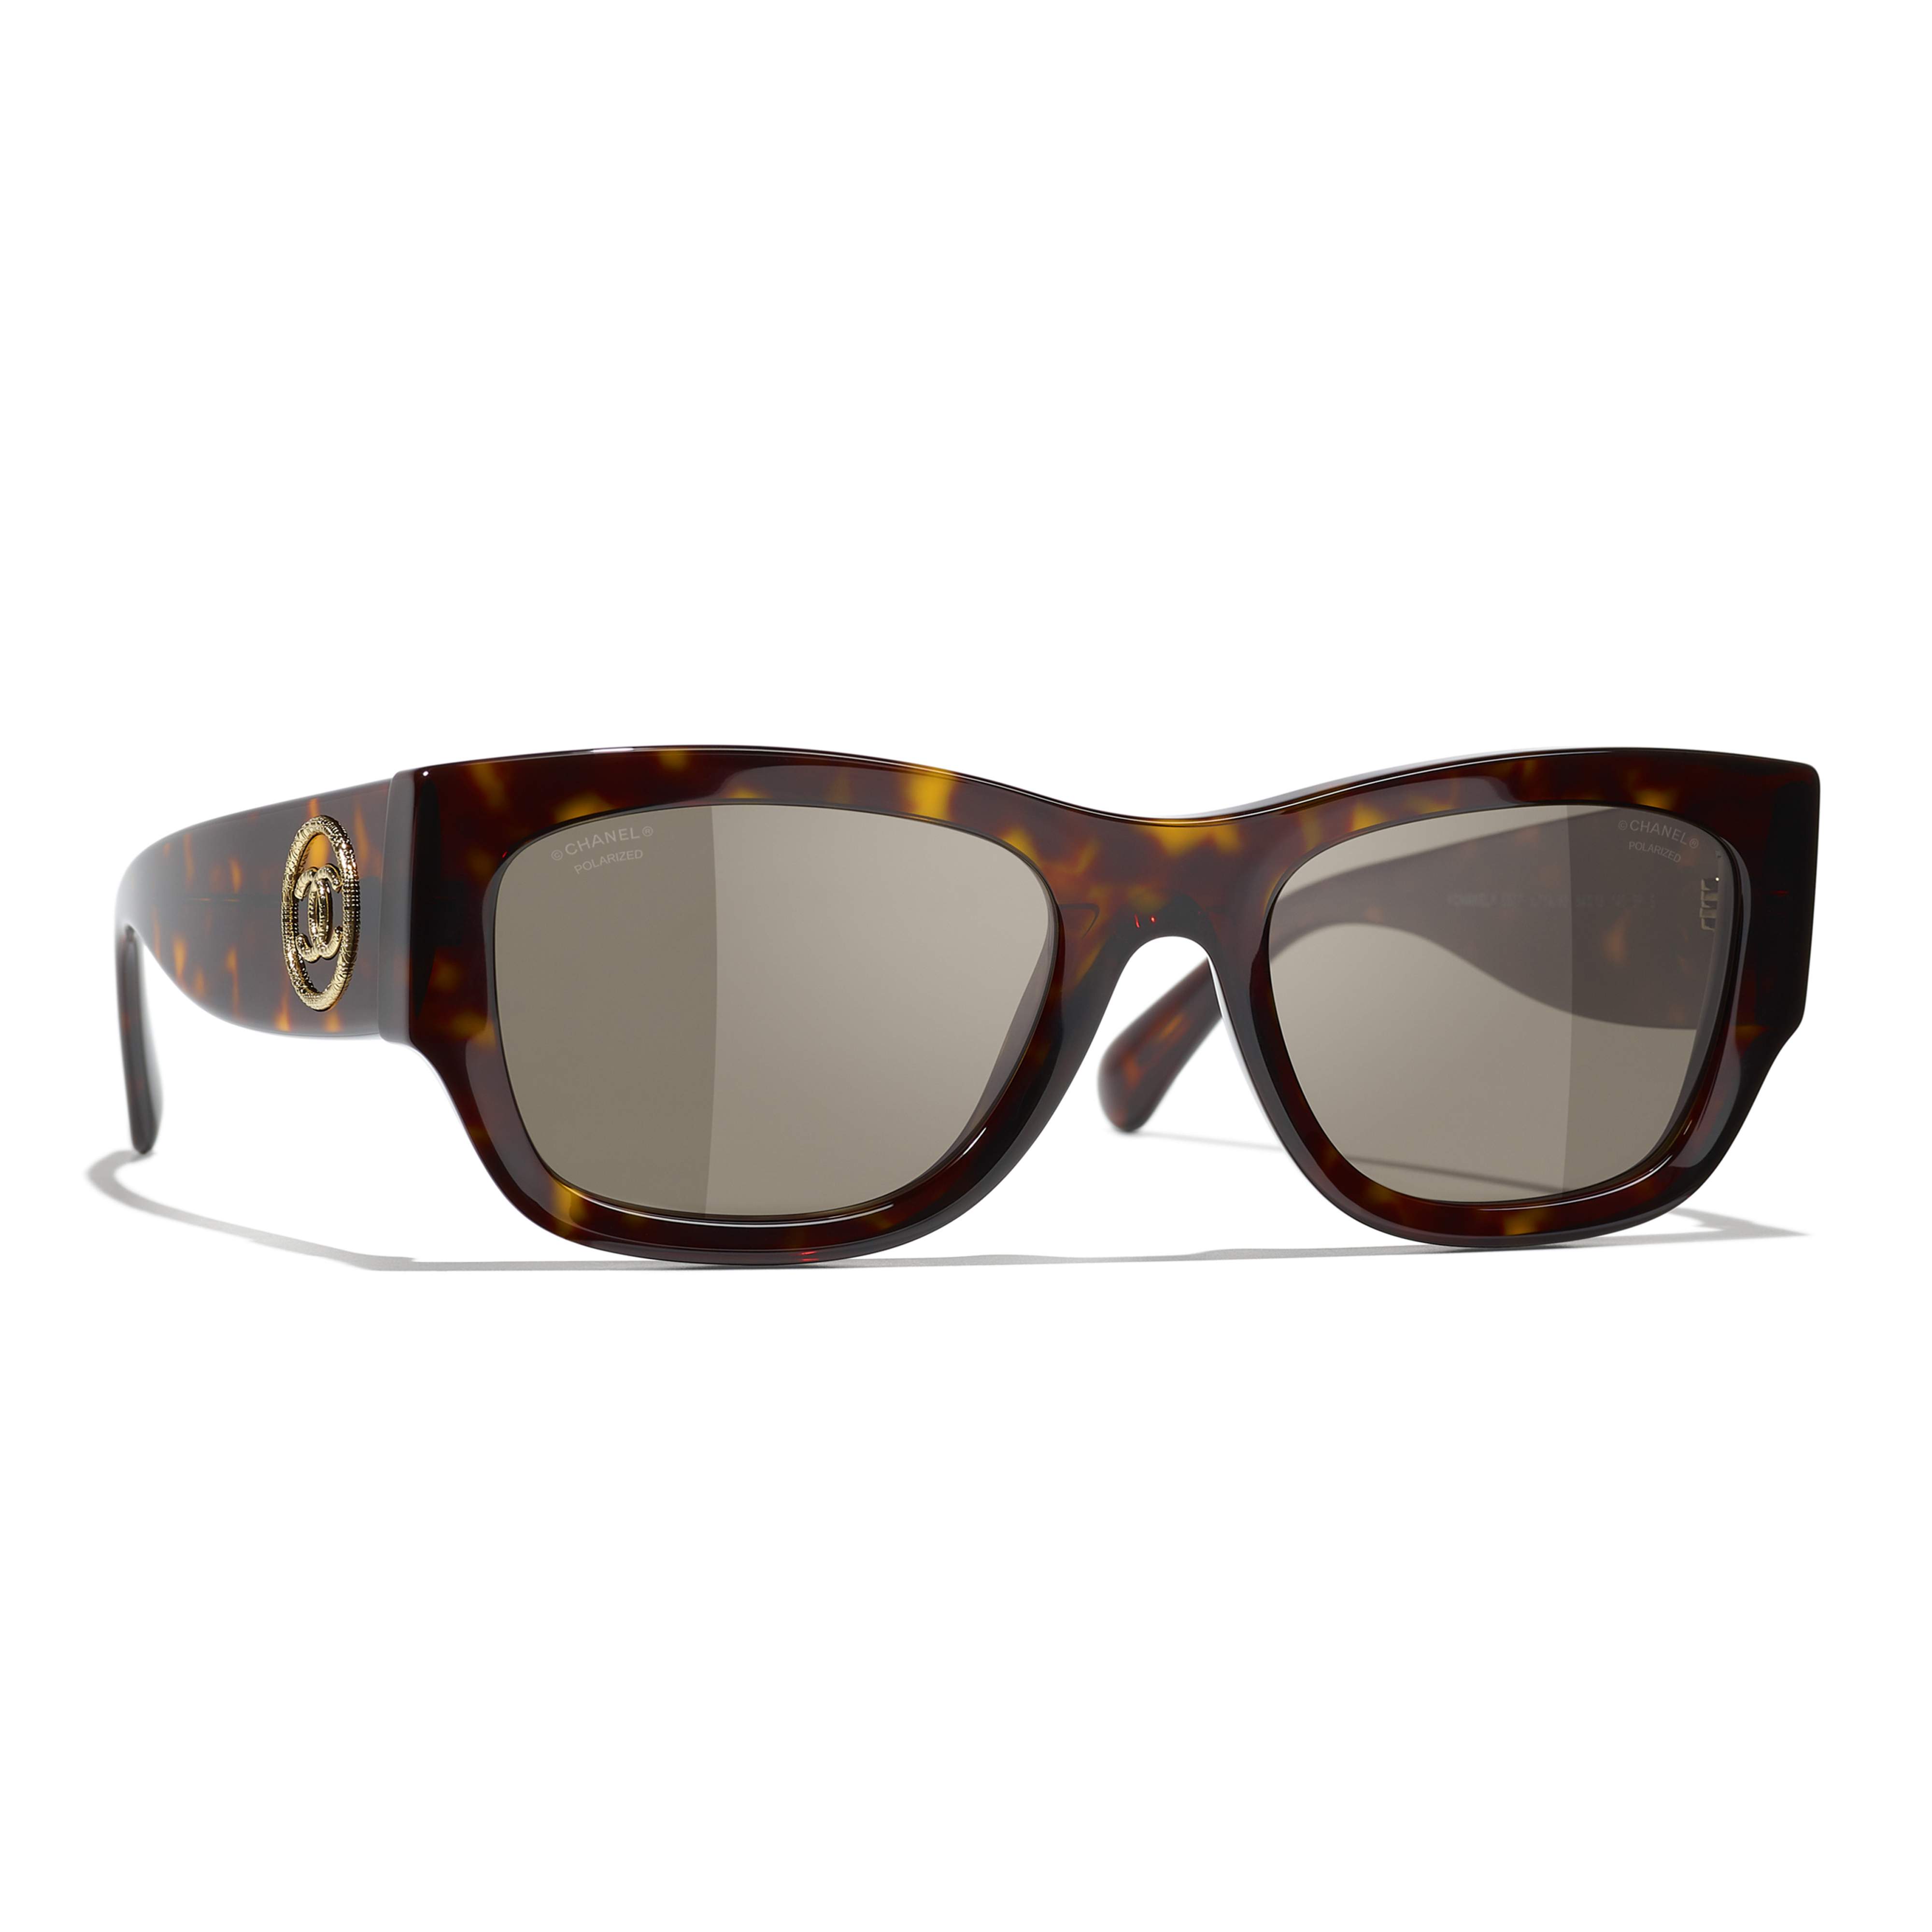 Sunglasses CHANEL CH5507 C71483 54-19 Dark havana in stock